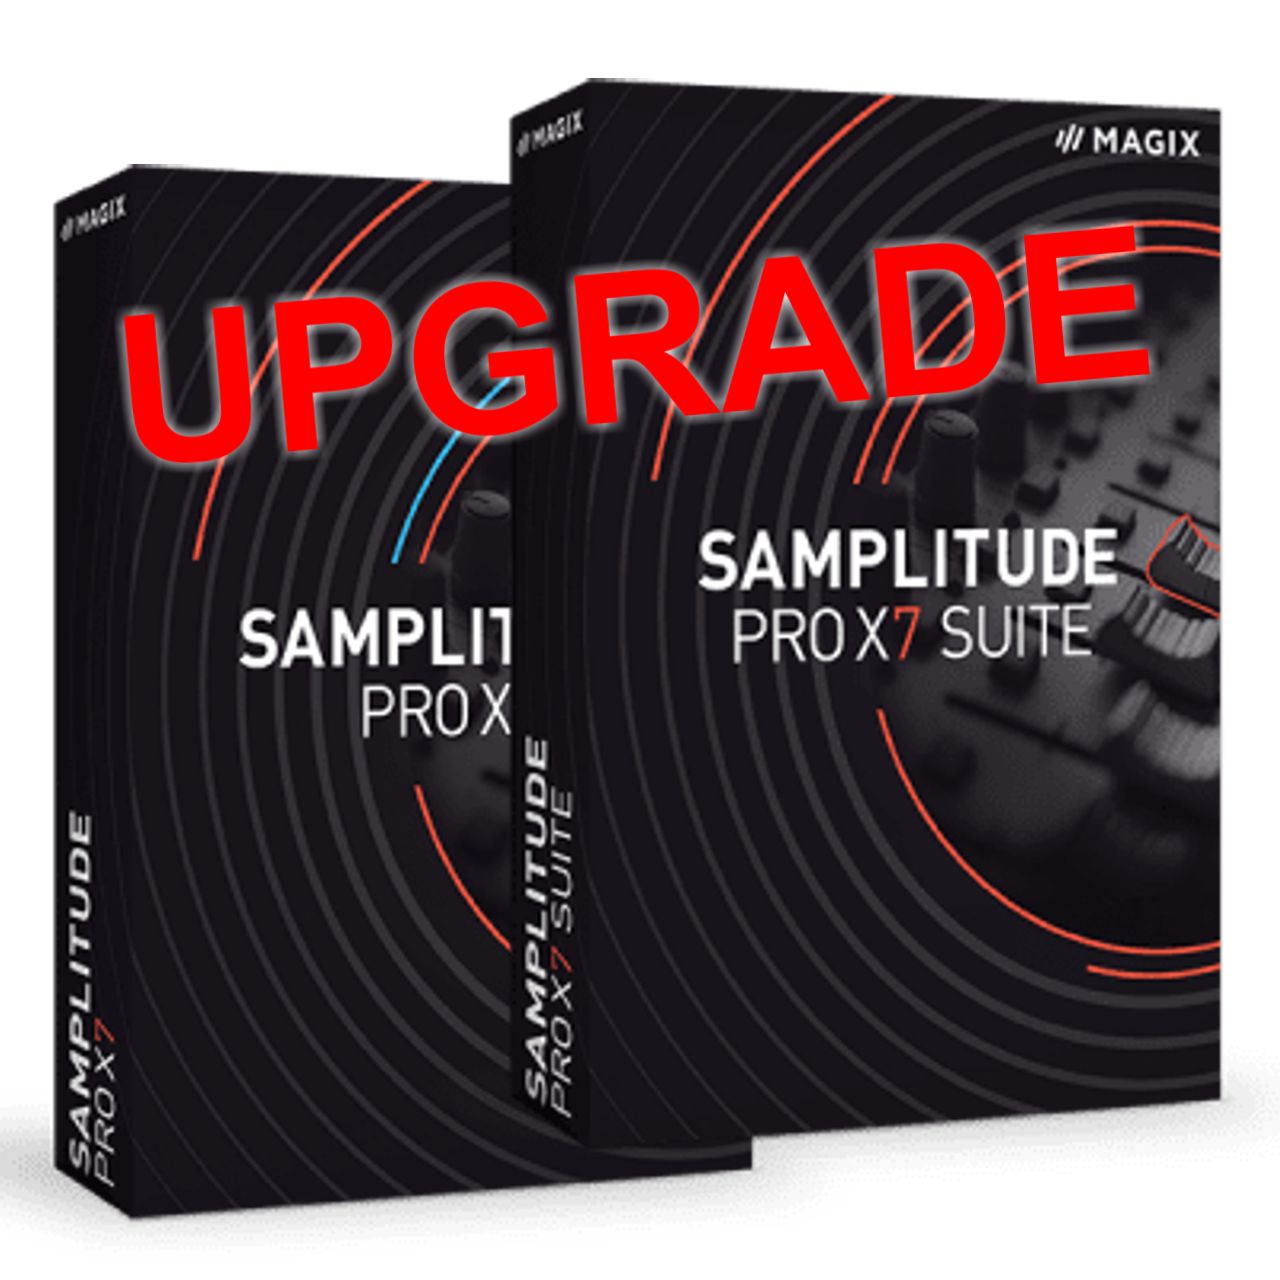 Samplitude Pro X7 y Pro X7 Suite